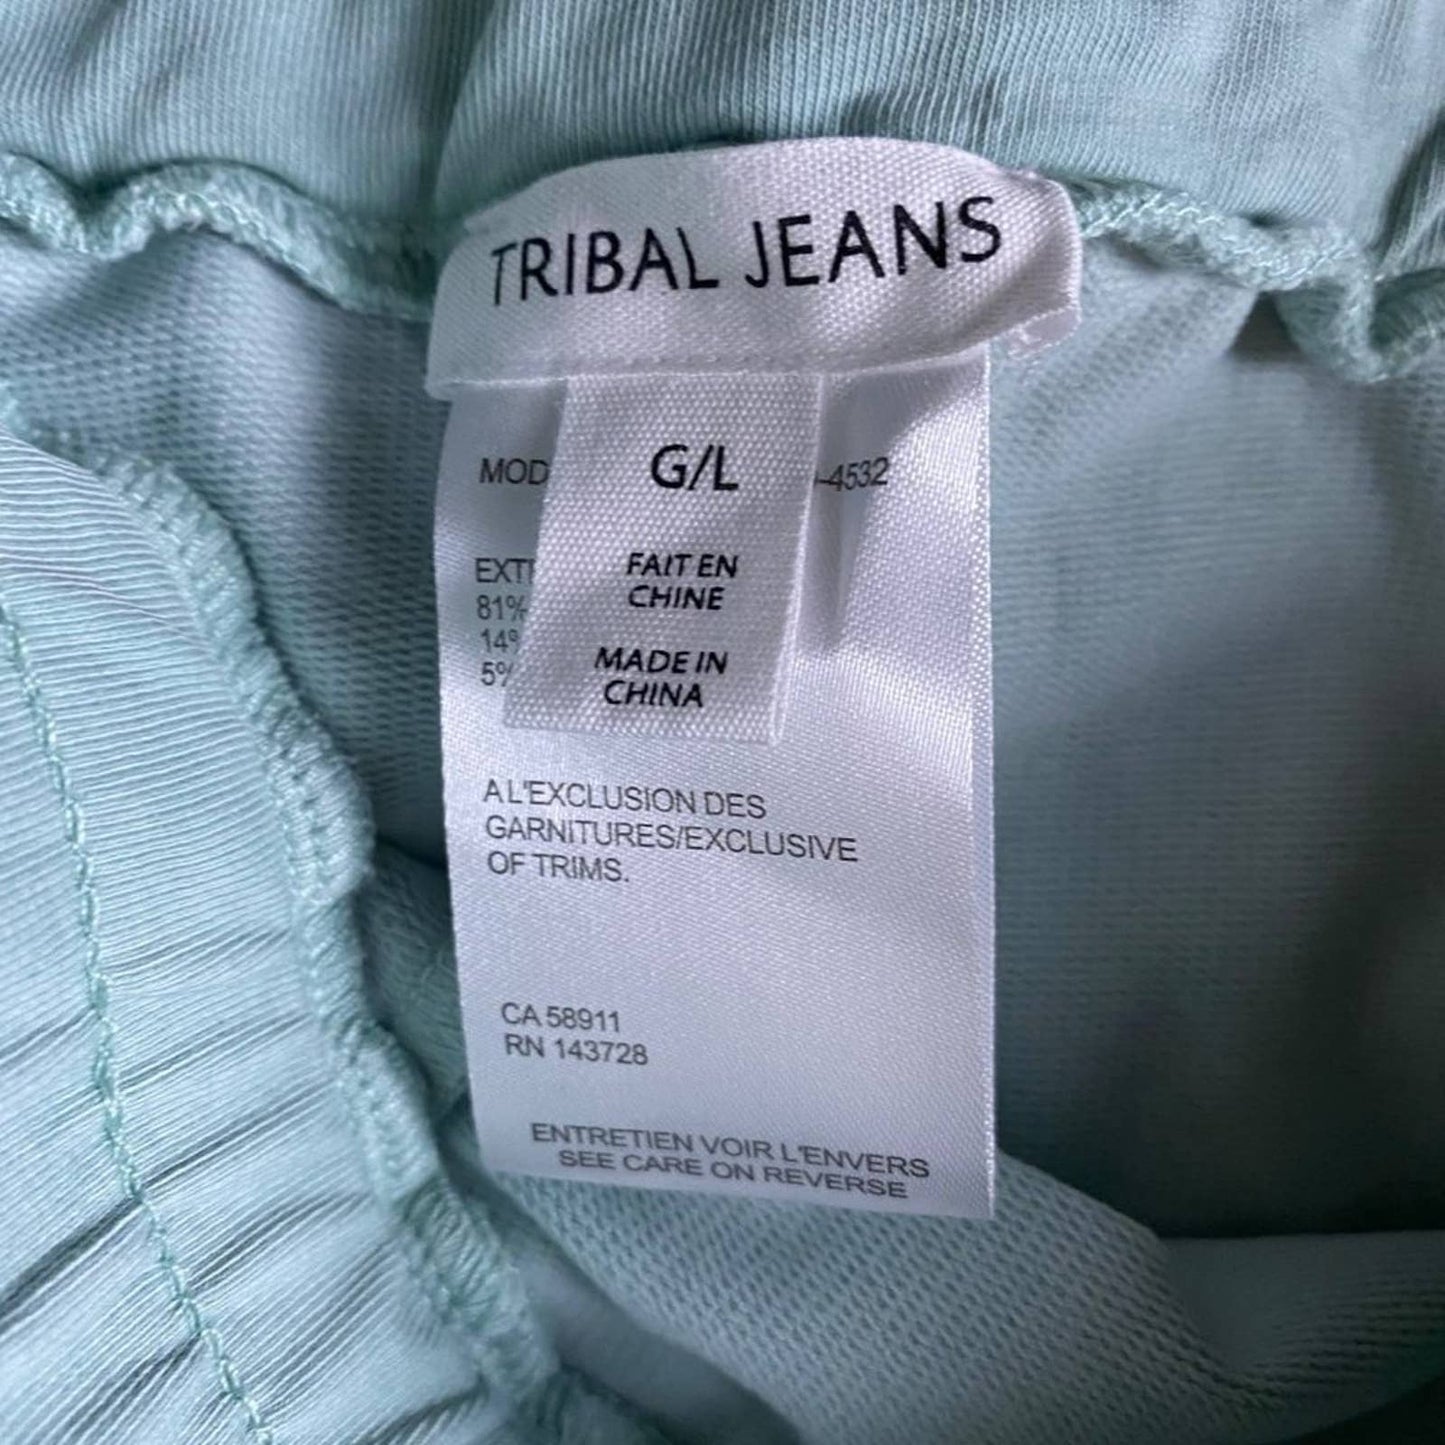 Tribal Jeans sz L cotton drawstring bermuda w pockets shorts in sea green NWT